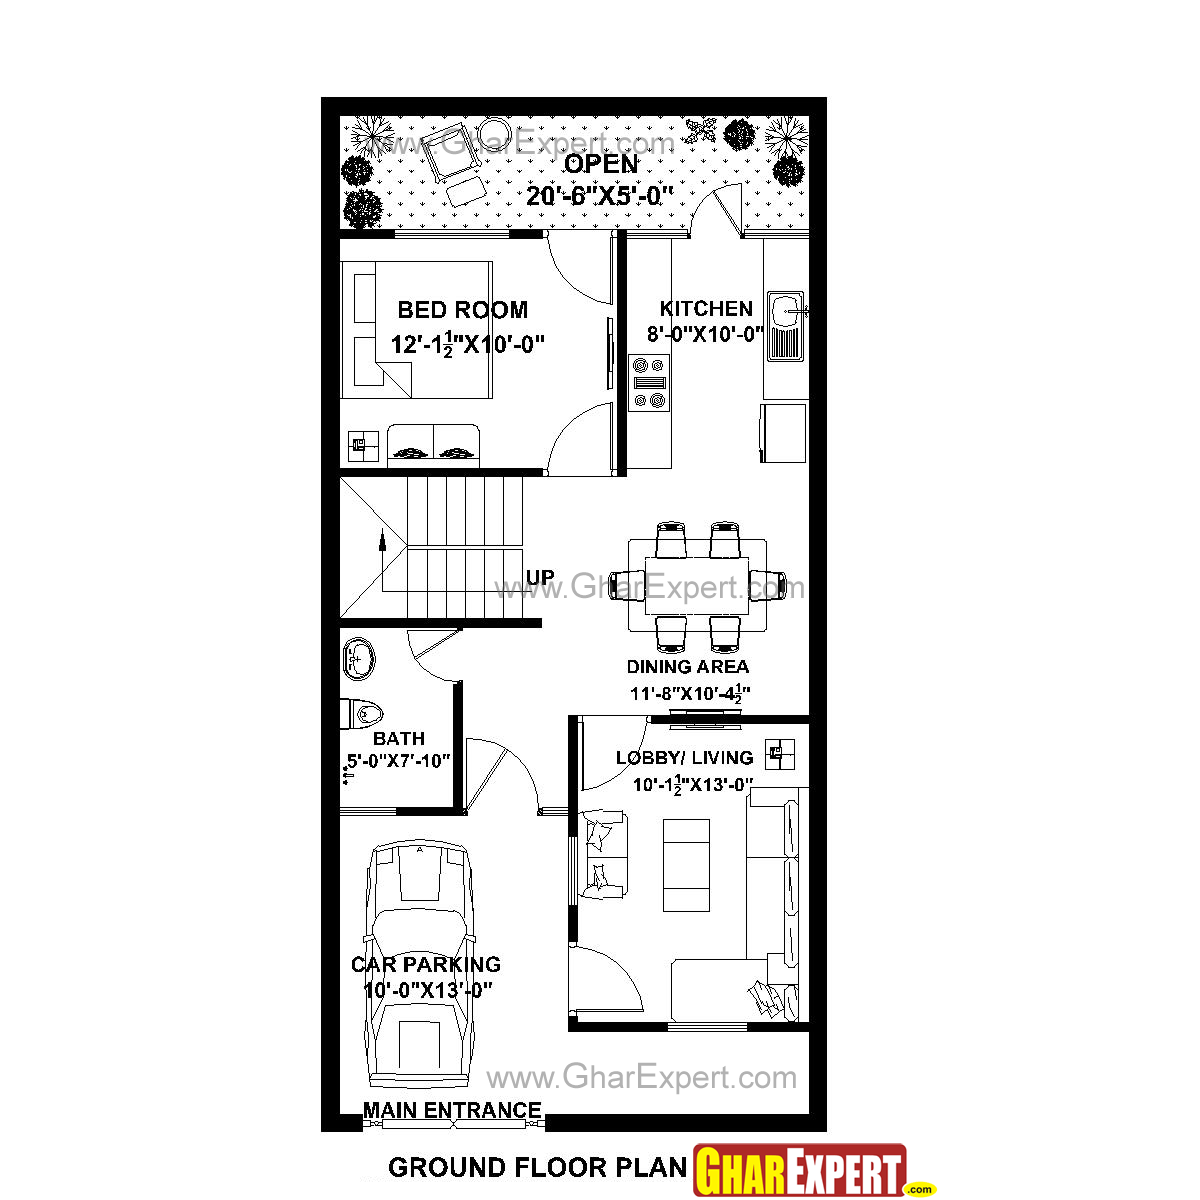 House Plan for 22 Feet by 45 Feet plot (Plot Size 110